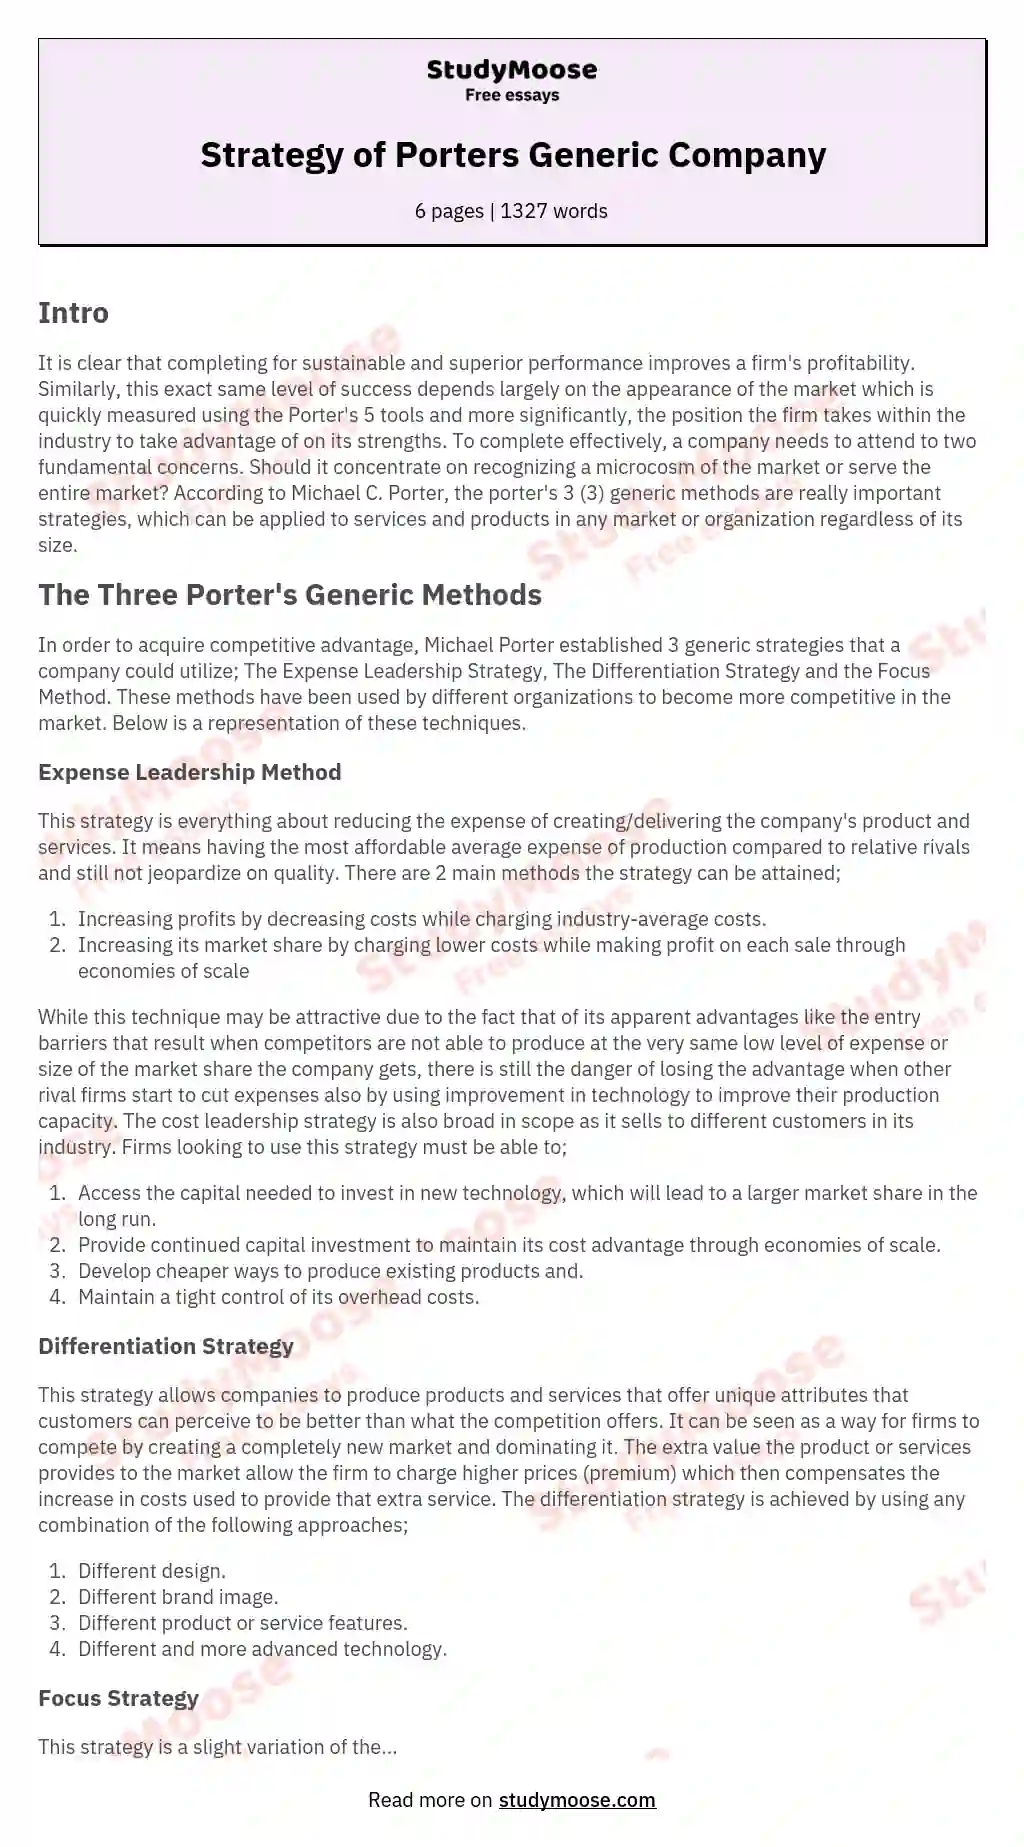 Strategy of Porters Generic Company essay